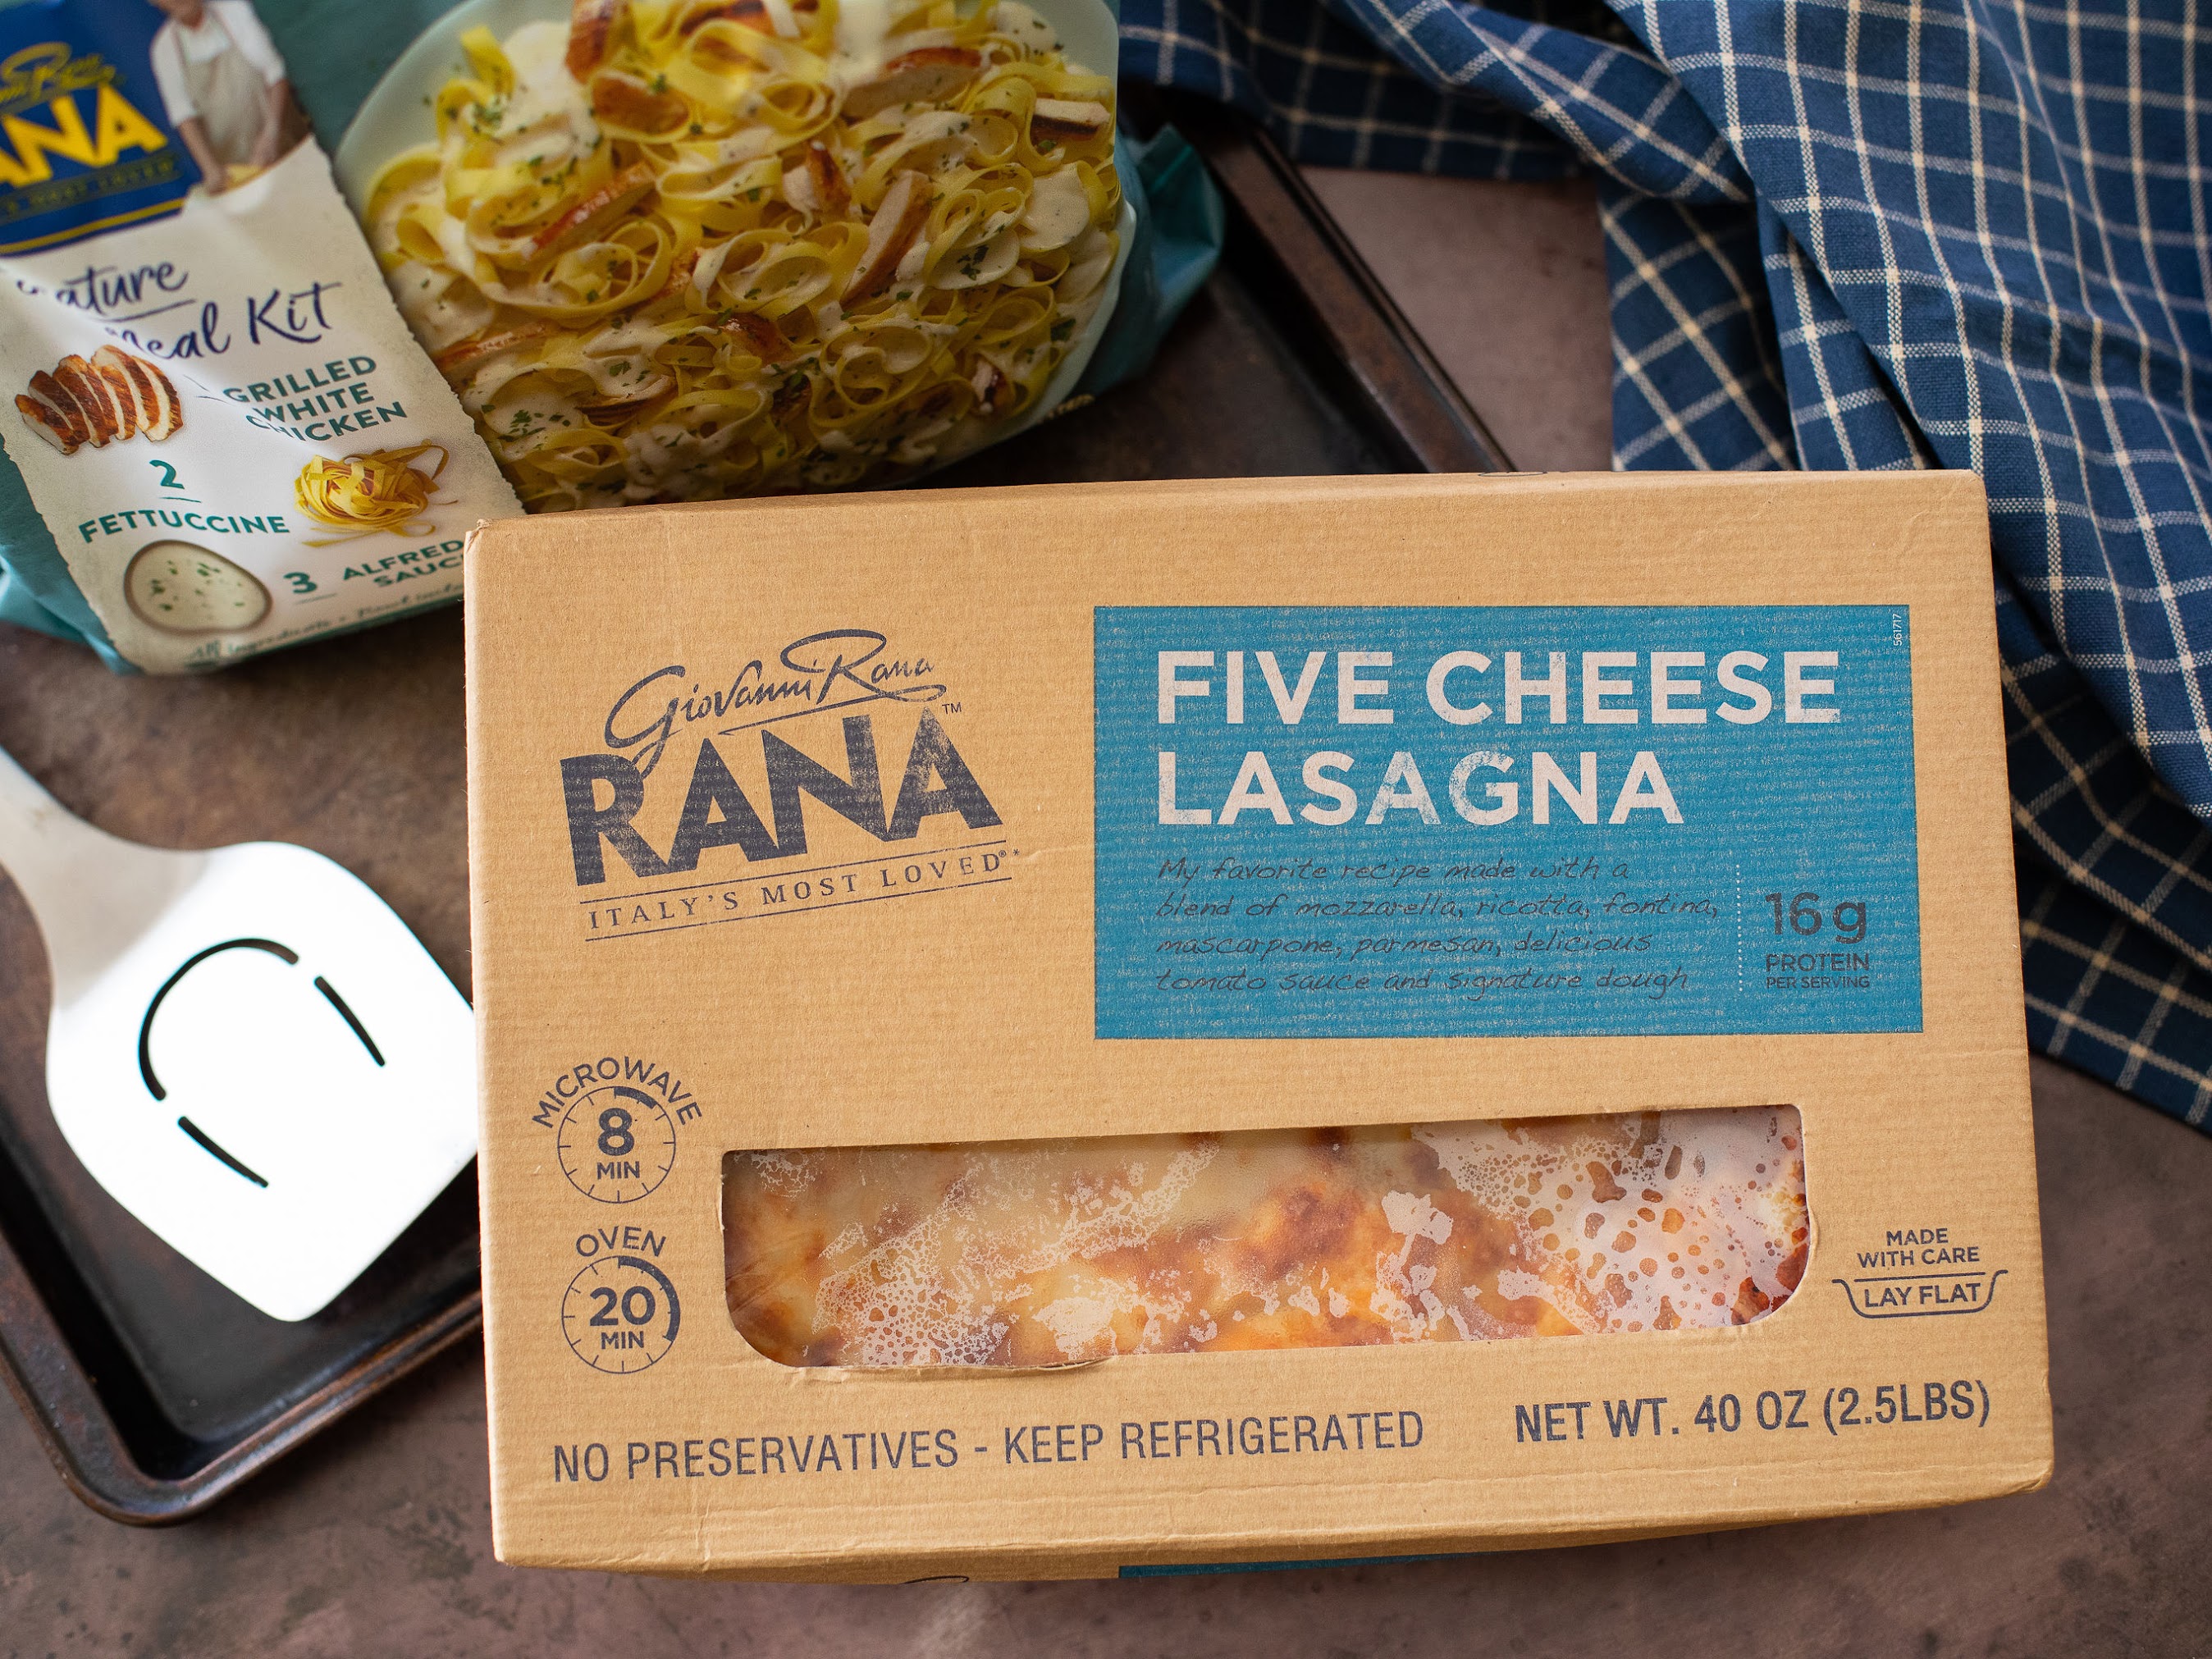 Grab A Rana Pasta Meal Kit For Just $9.99 At Publix (Regular Price $14.